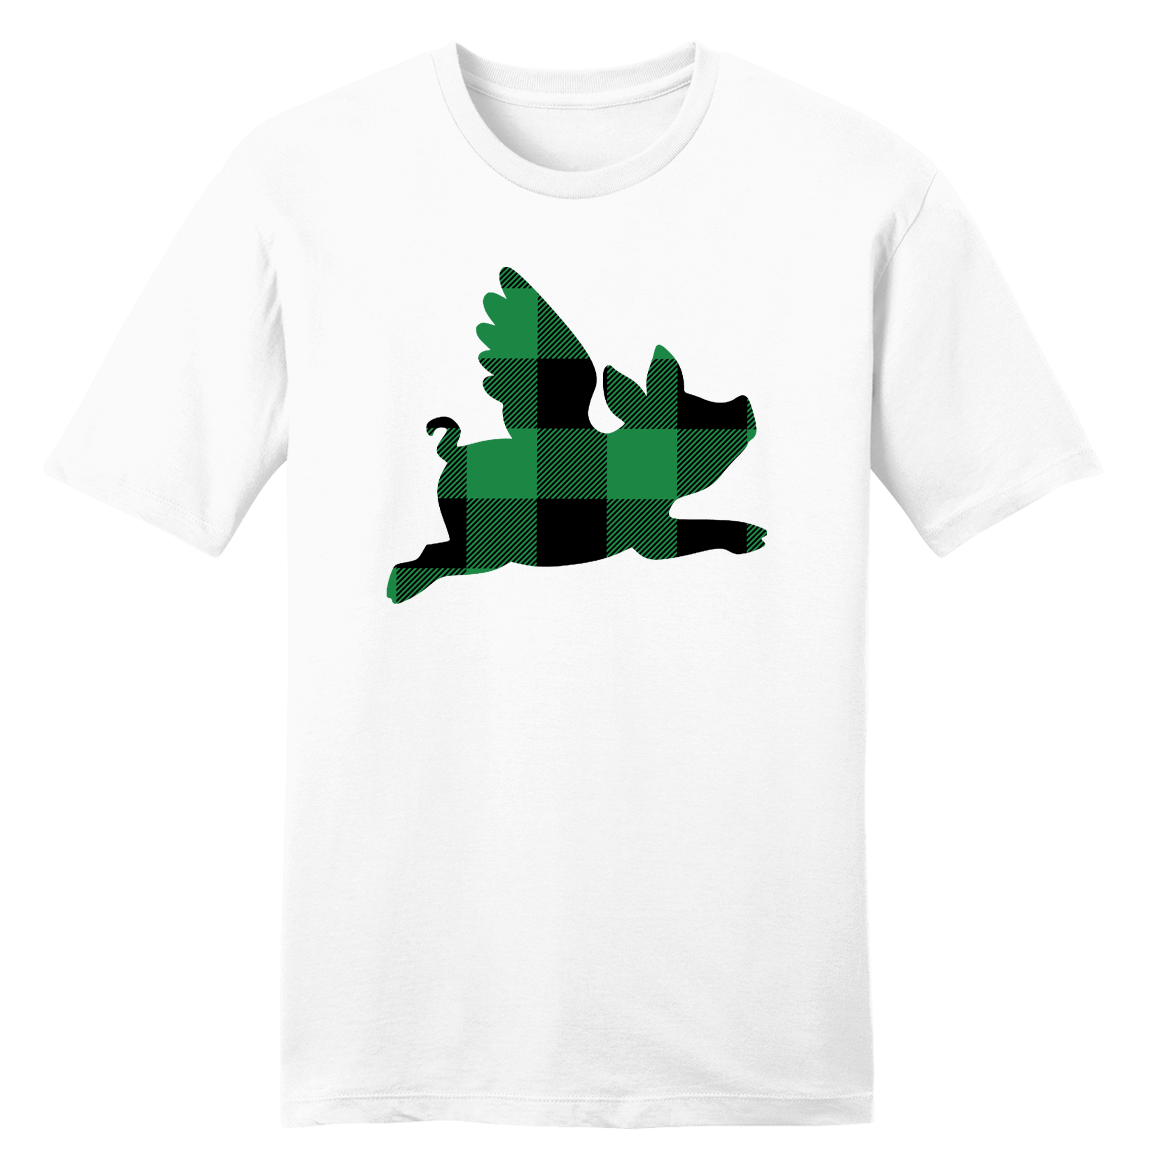 Cincy Plaid Flying Pig T-shirt